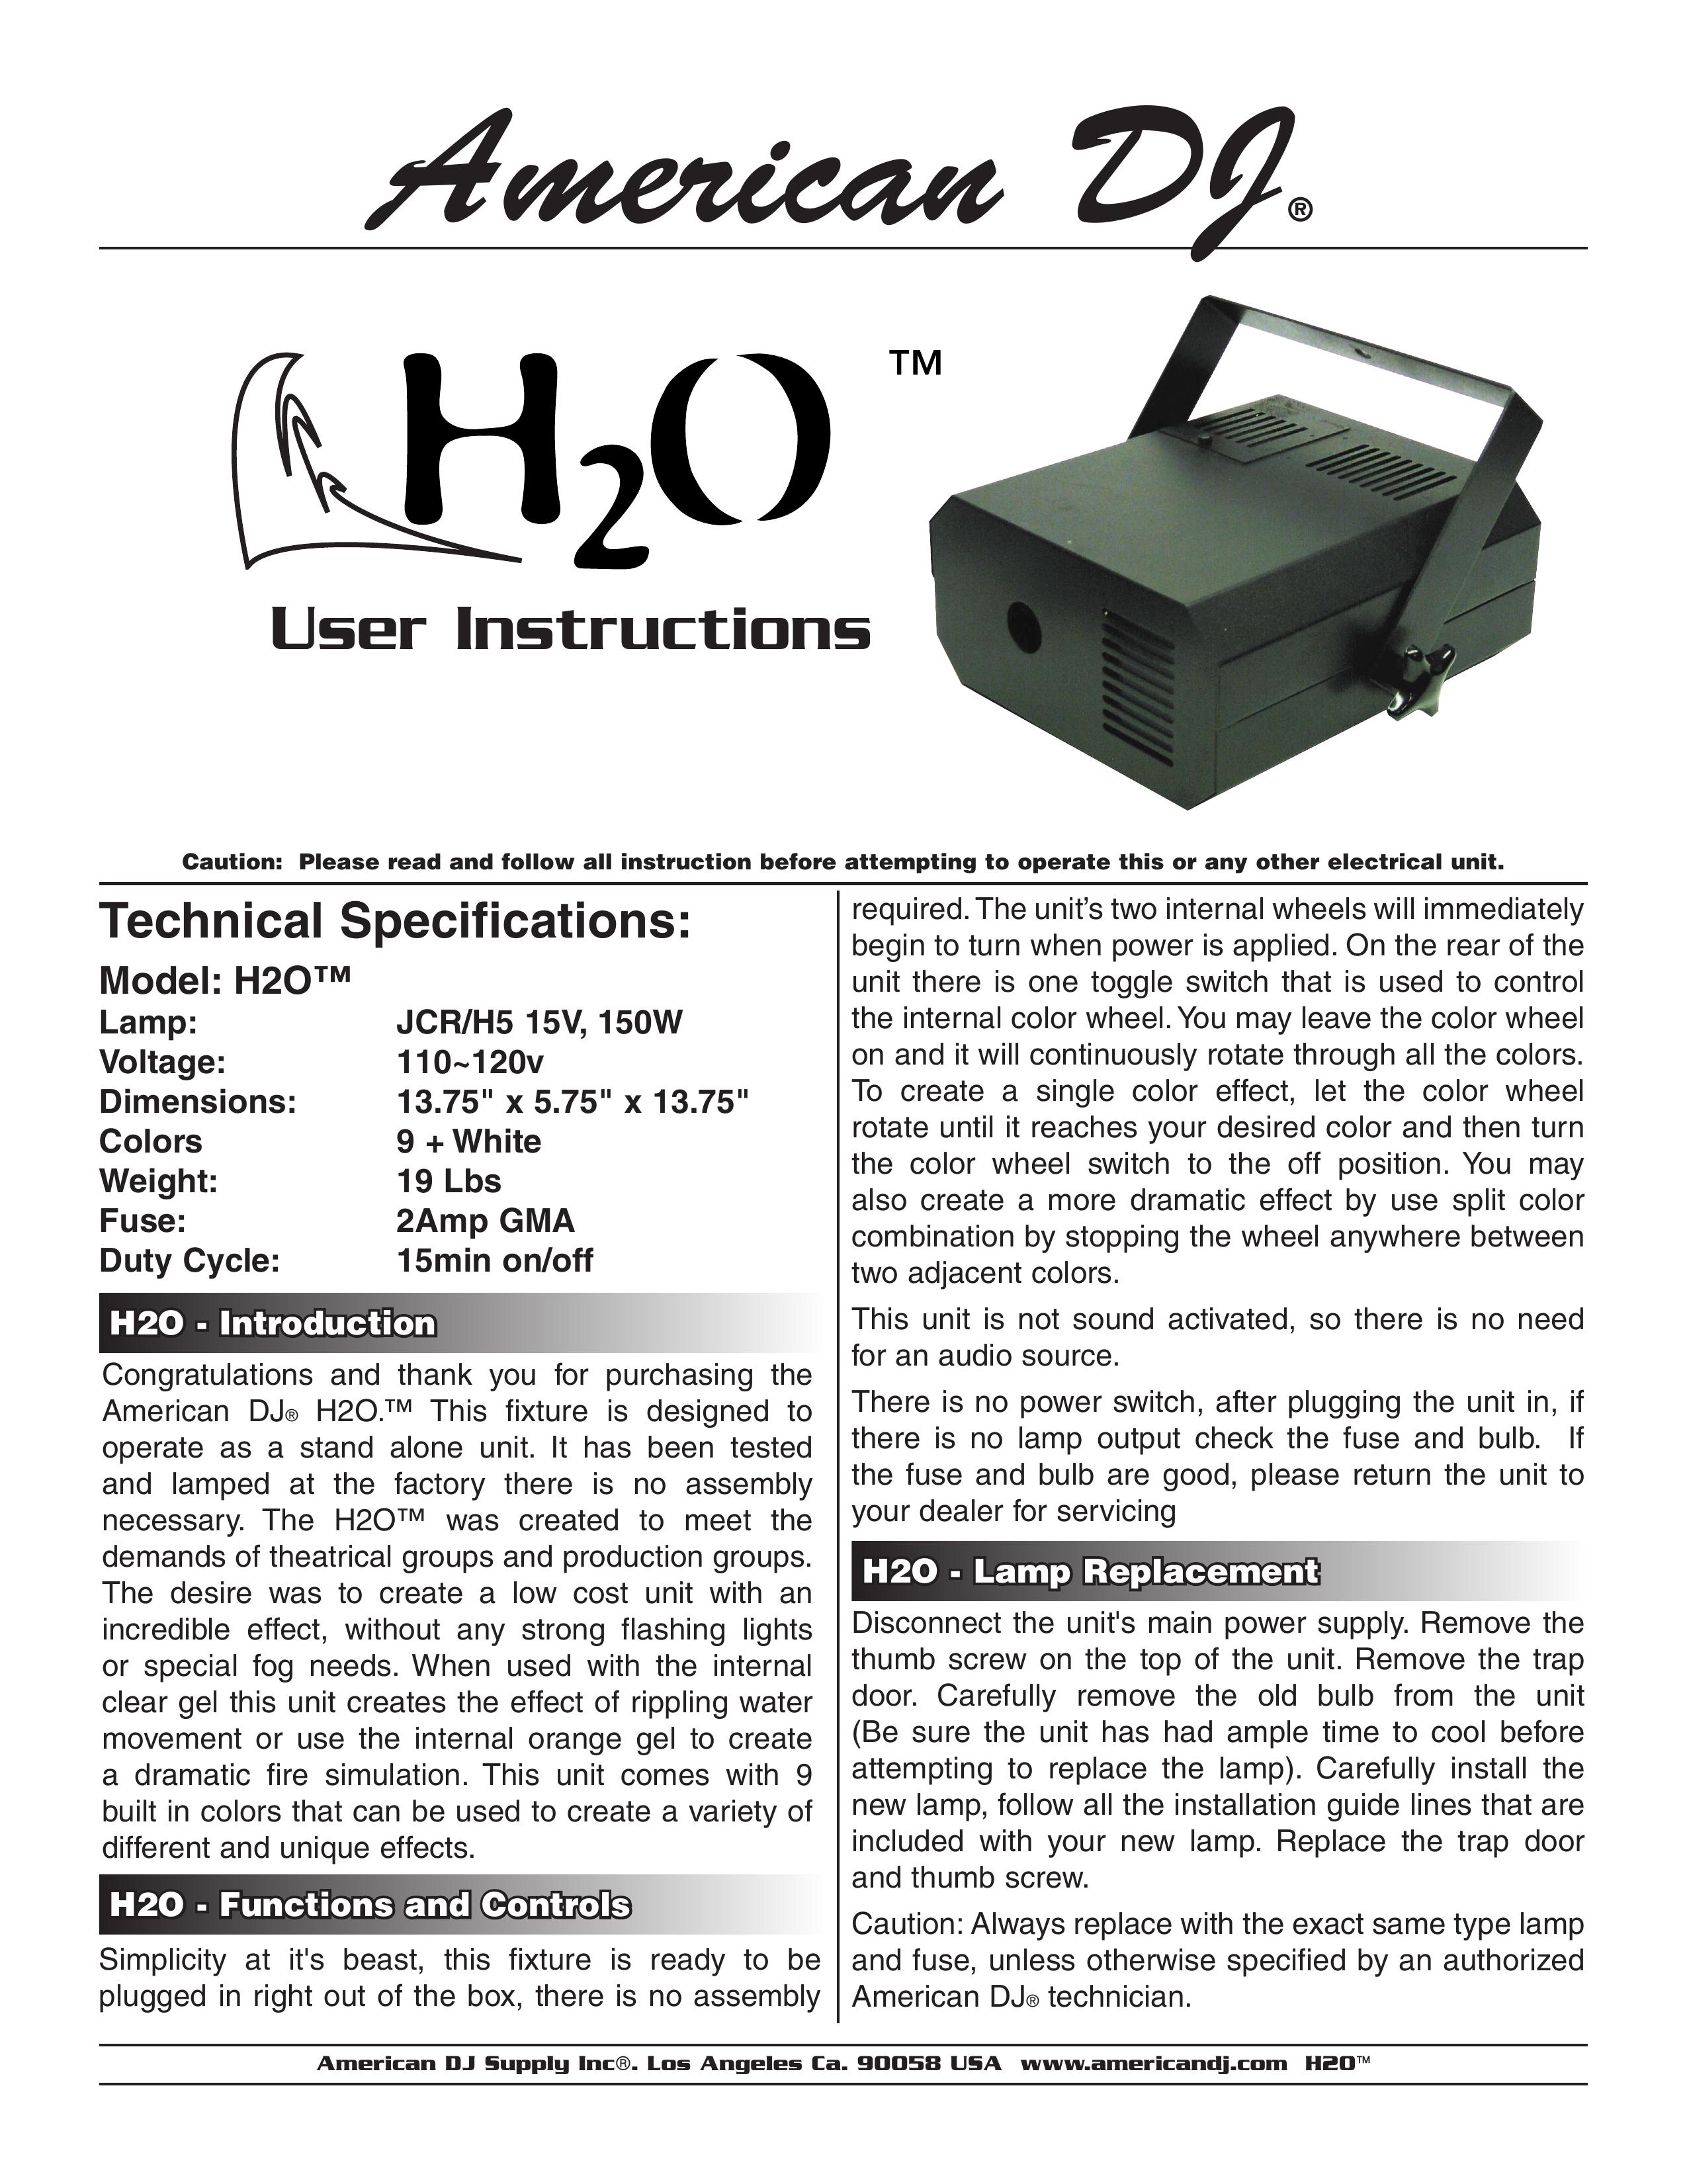 American DJ H2O DJ Equipment User Manual